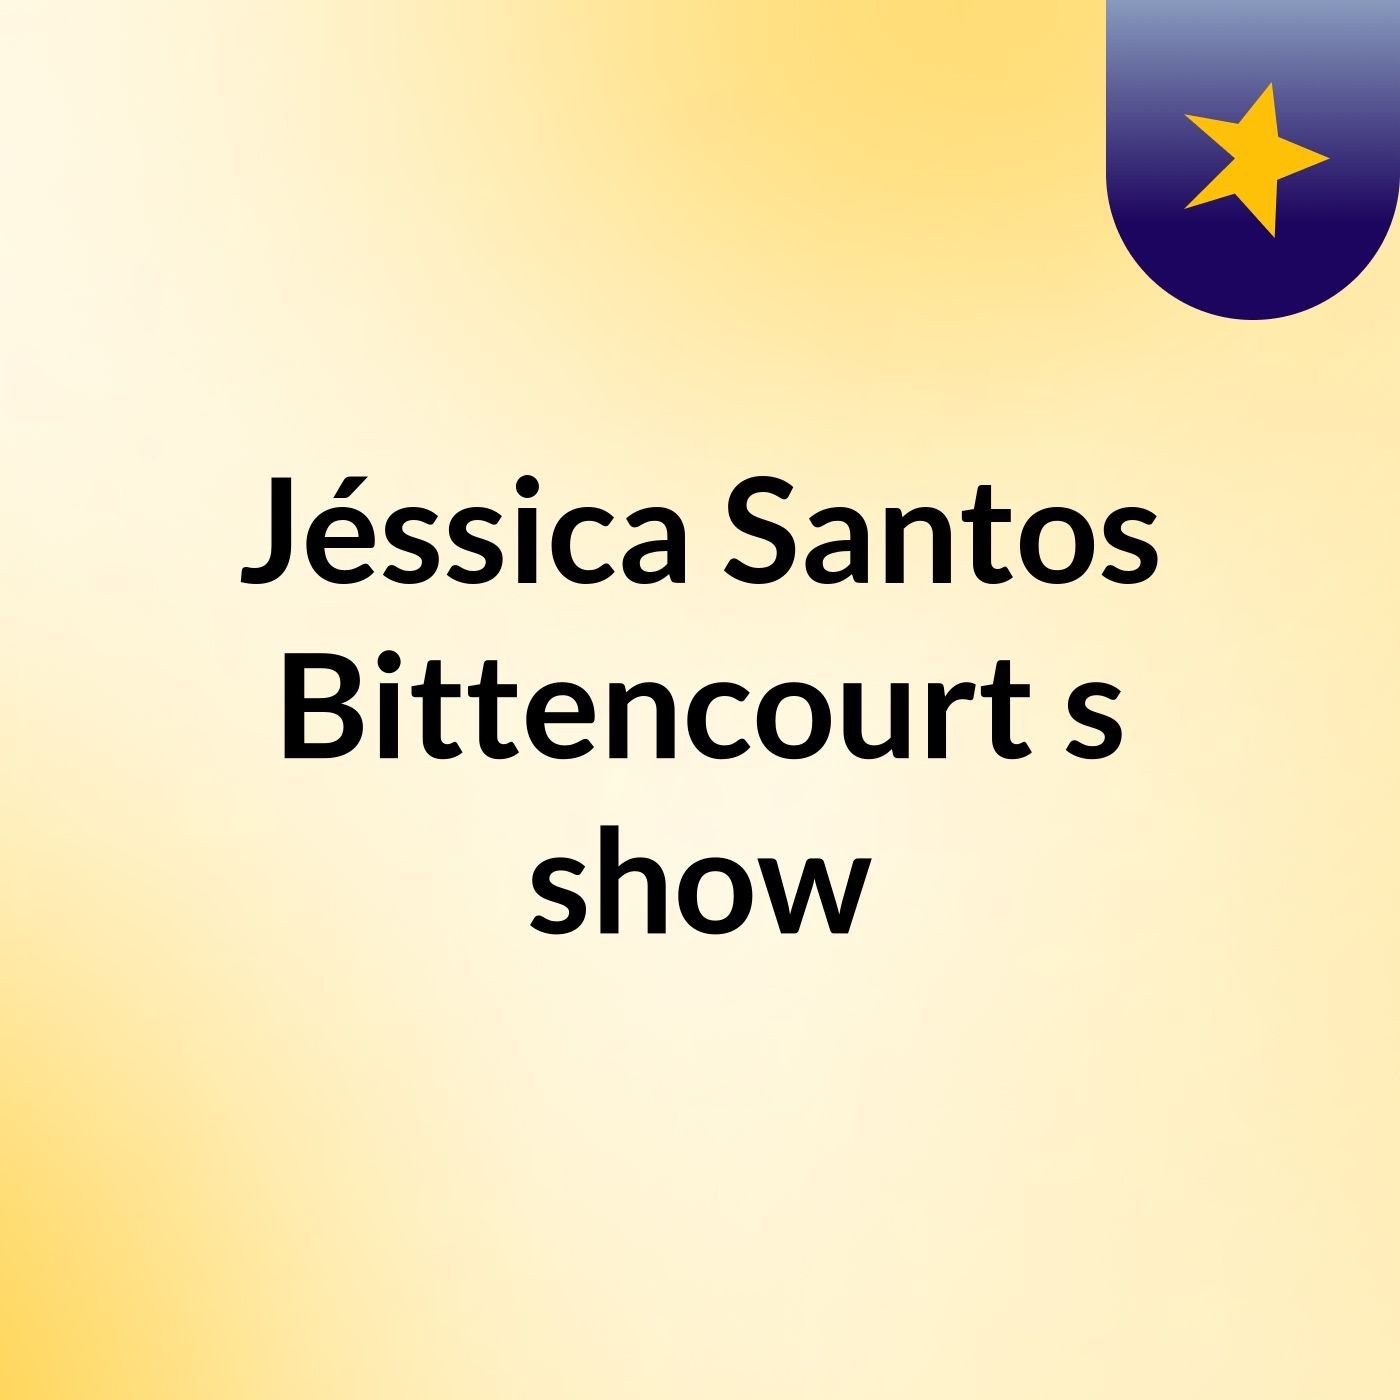 Jéssica Santos Bittencourt's show